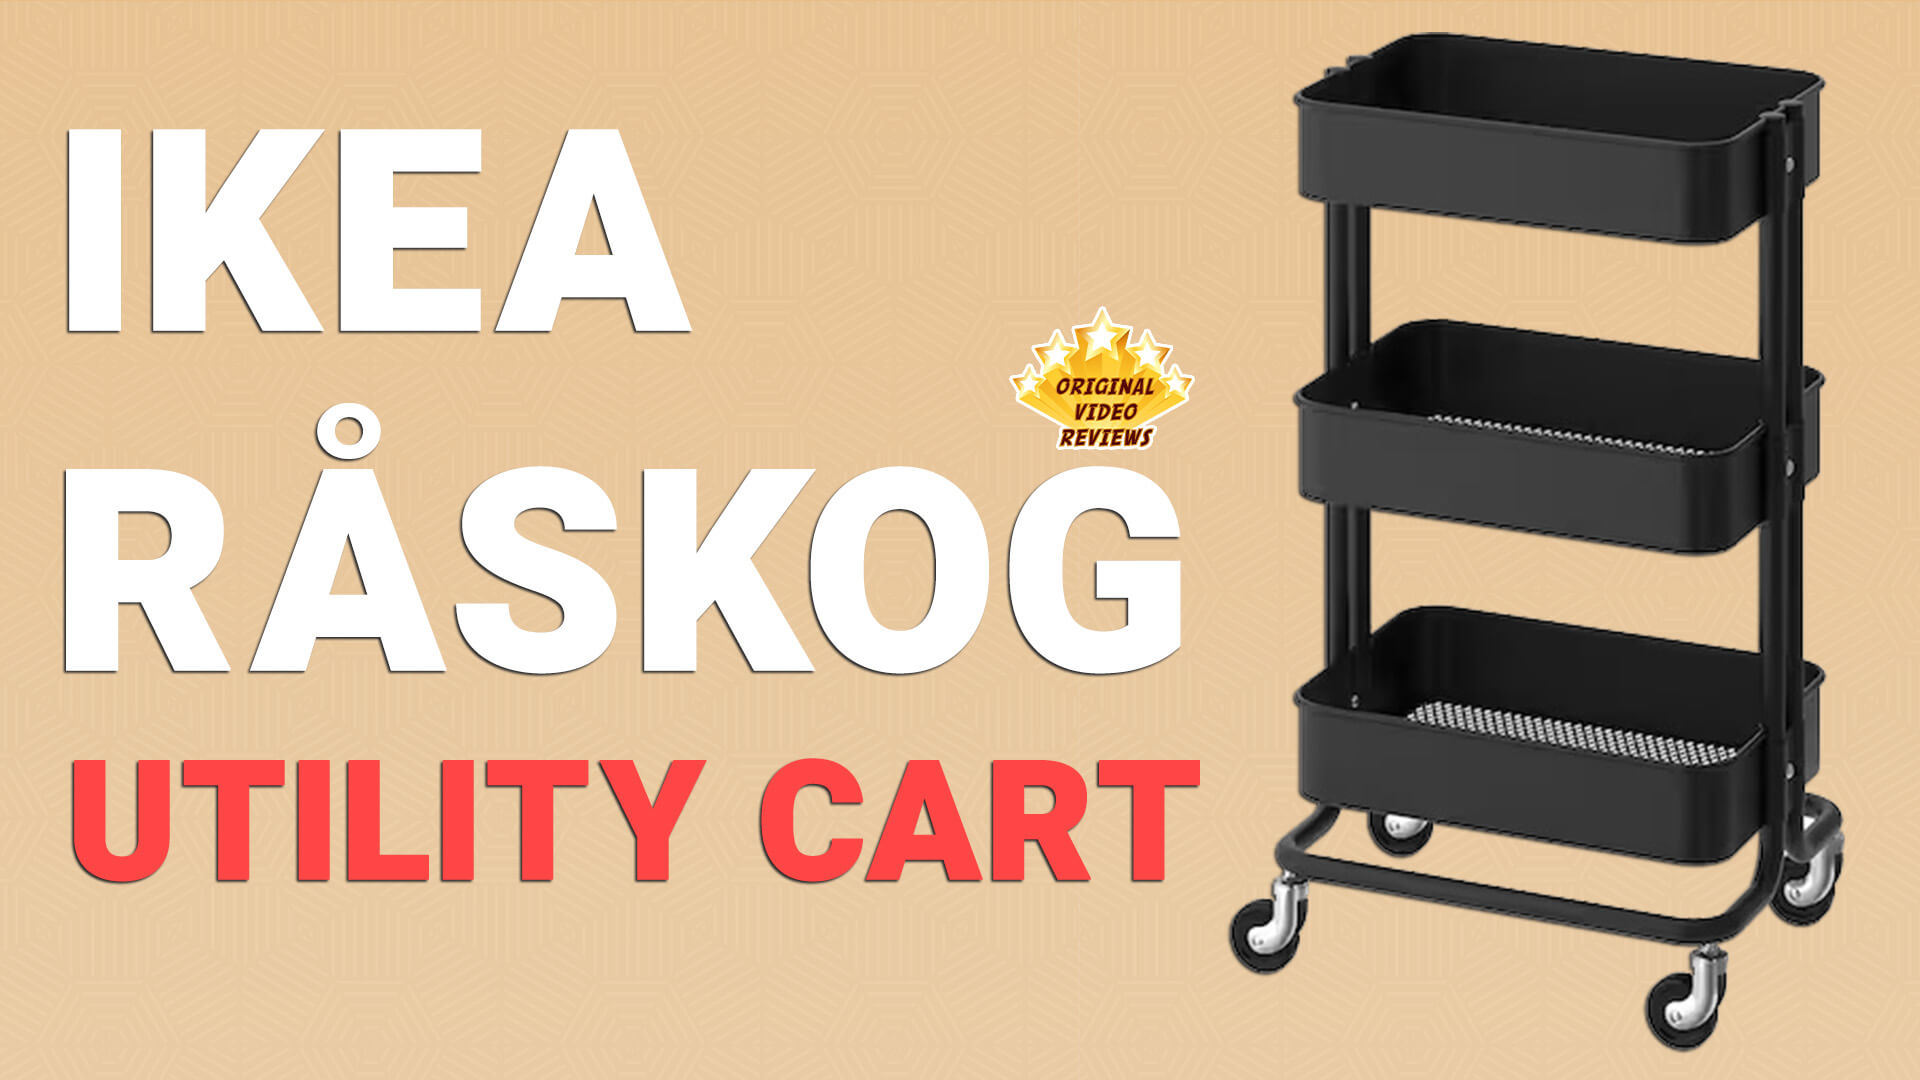 IKEA RÅSKOG Utility Cart Black Review (Thumbnail 1920x1080)